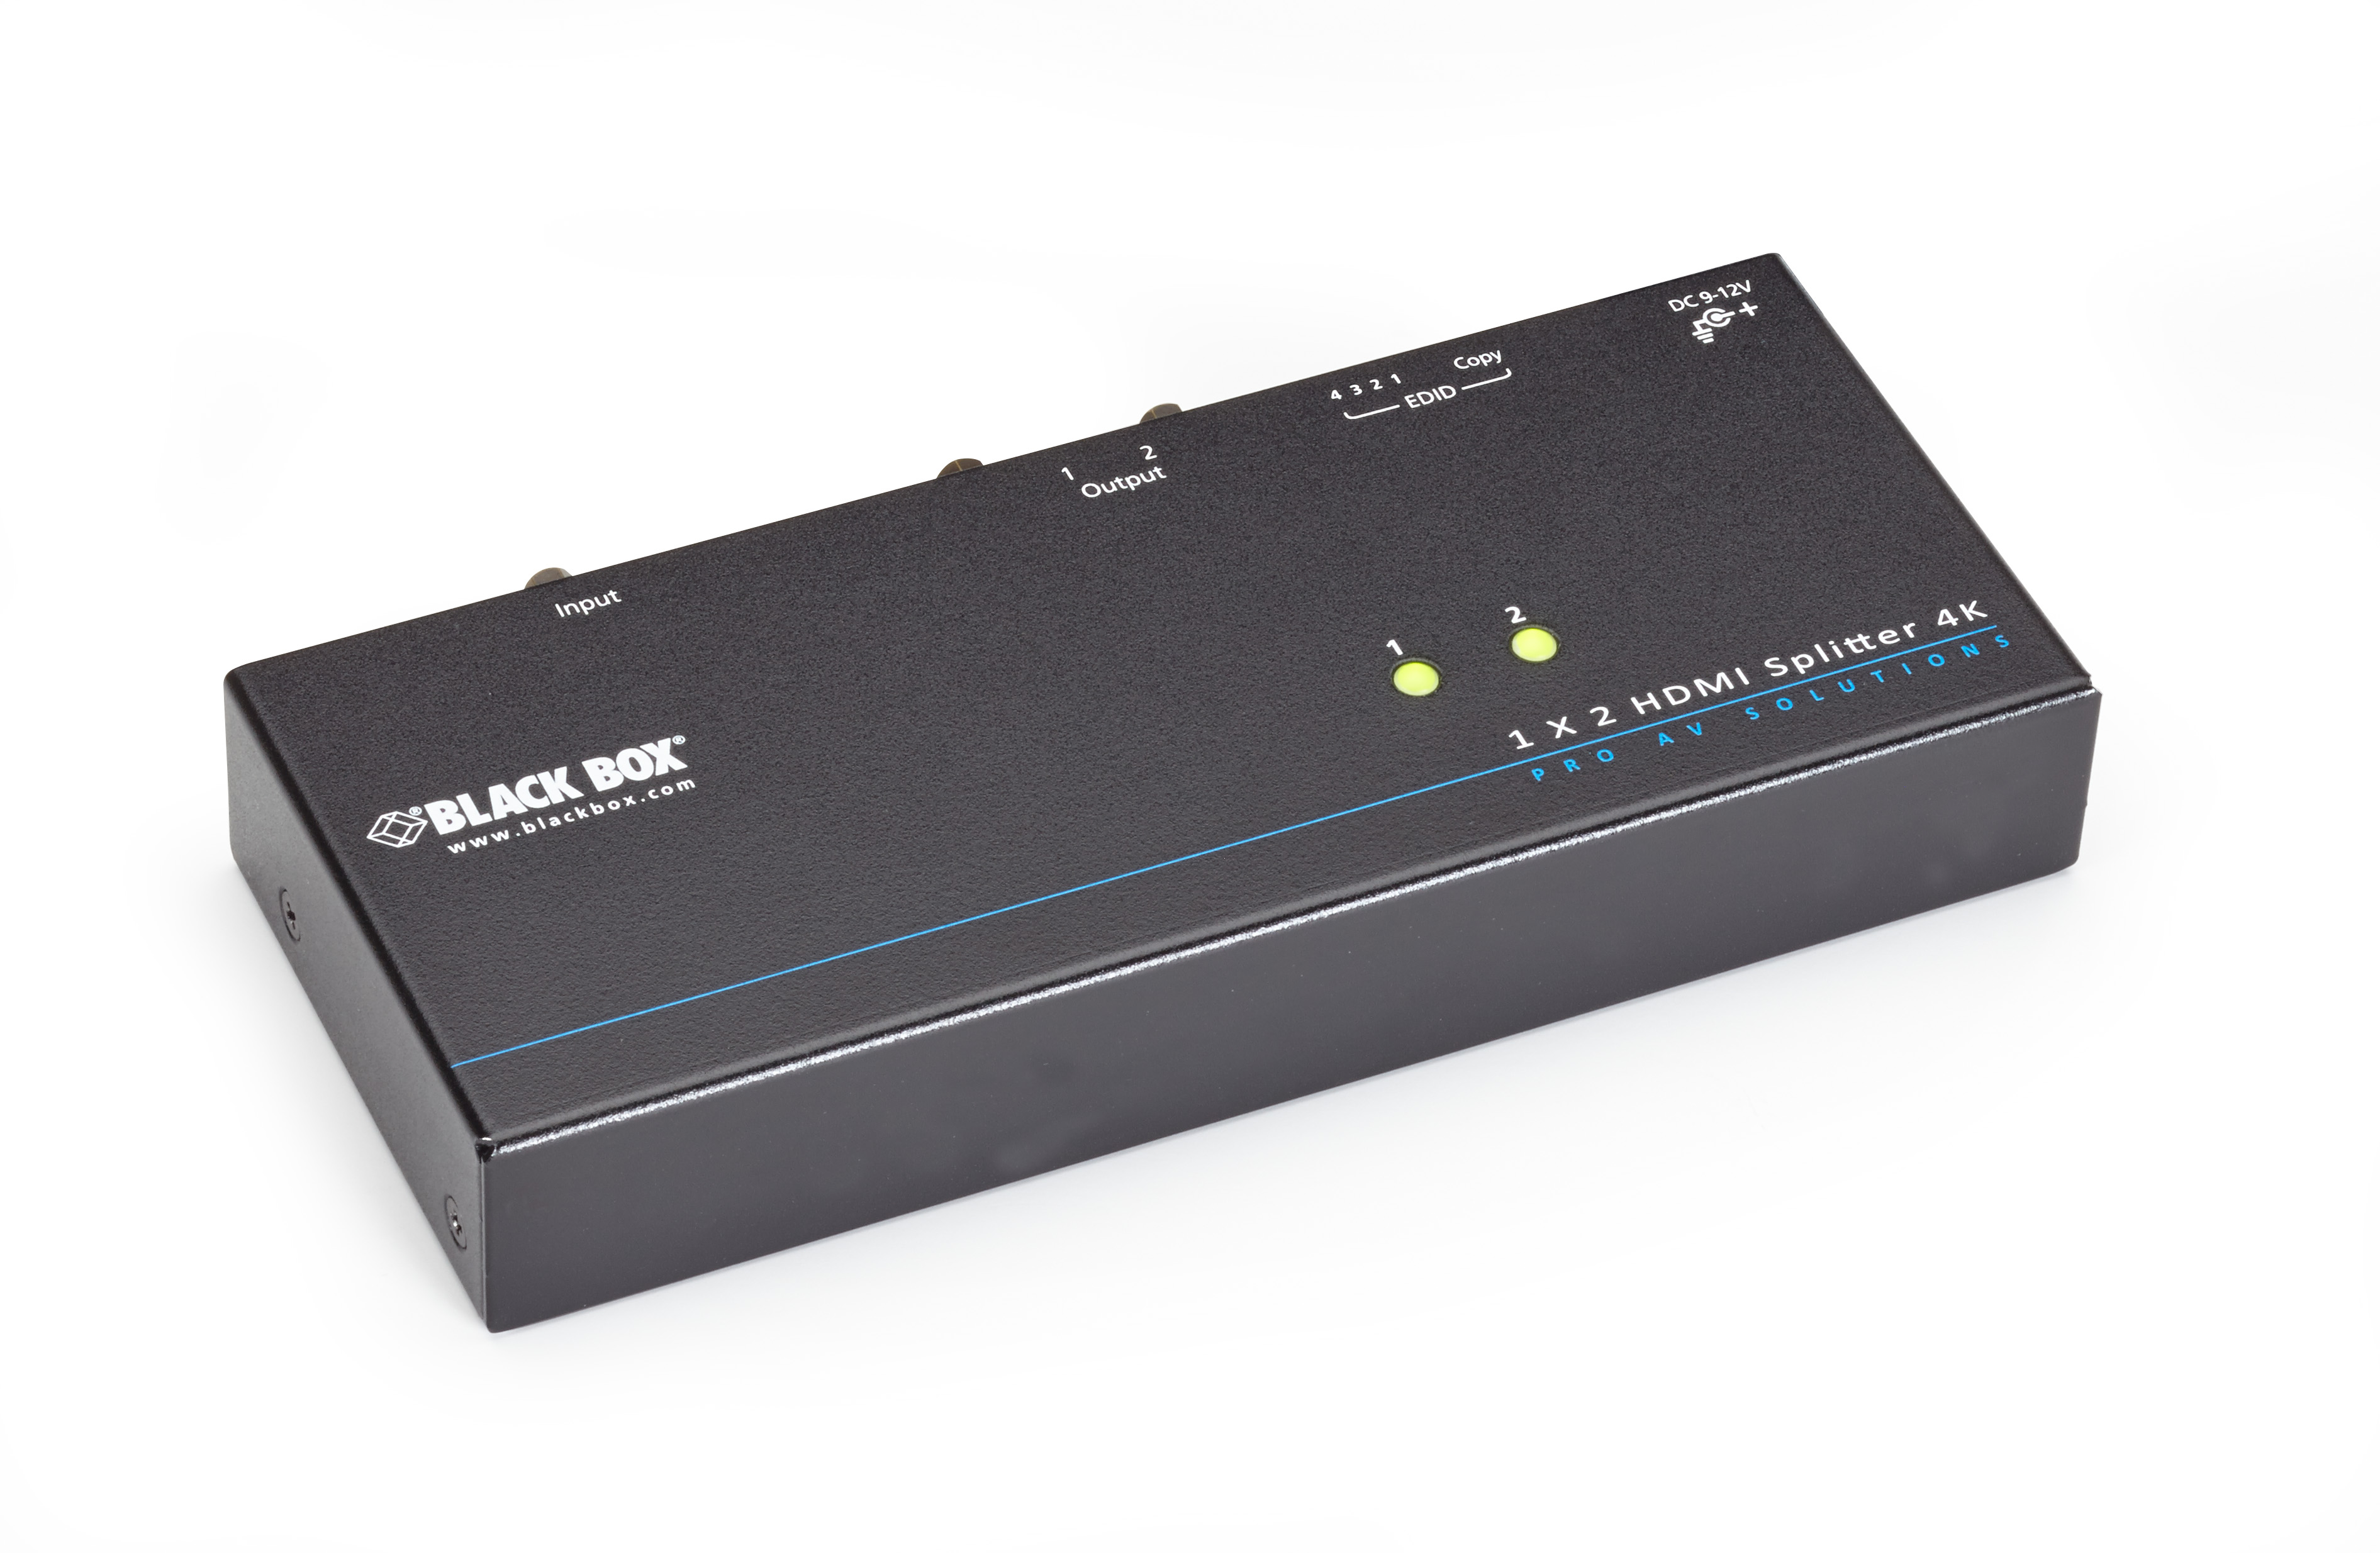 Human opbevaring pumpe 1x2 4K HDMI Splitter | Black Box